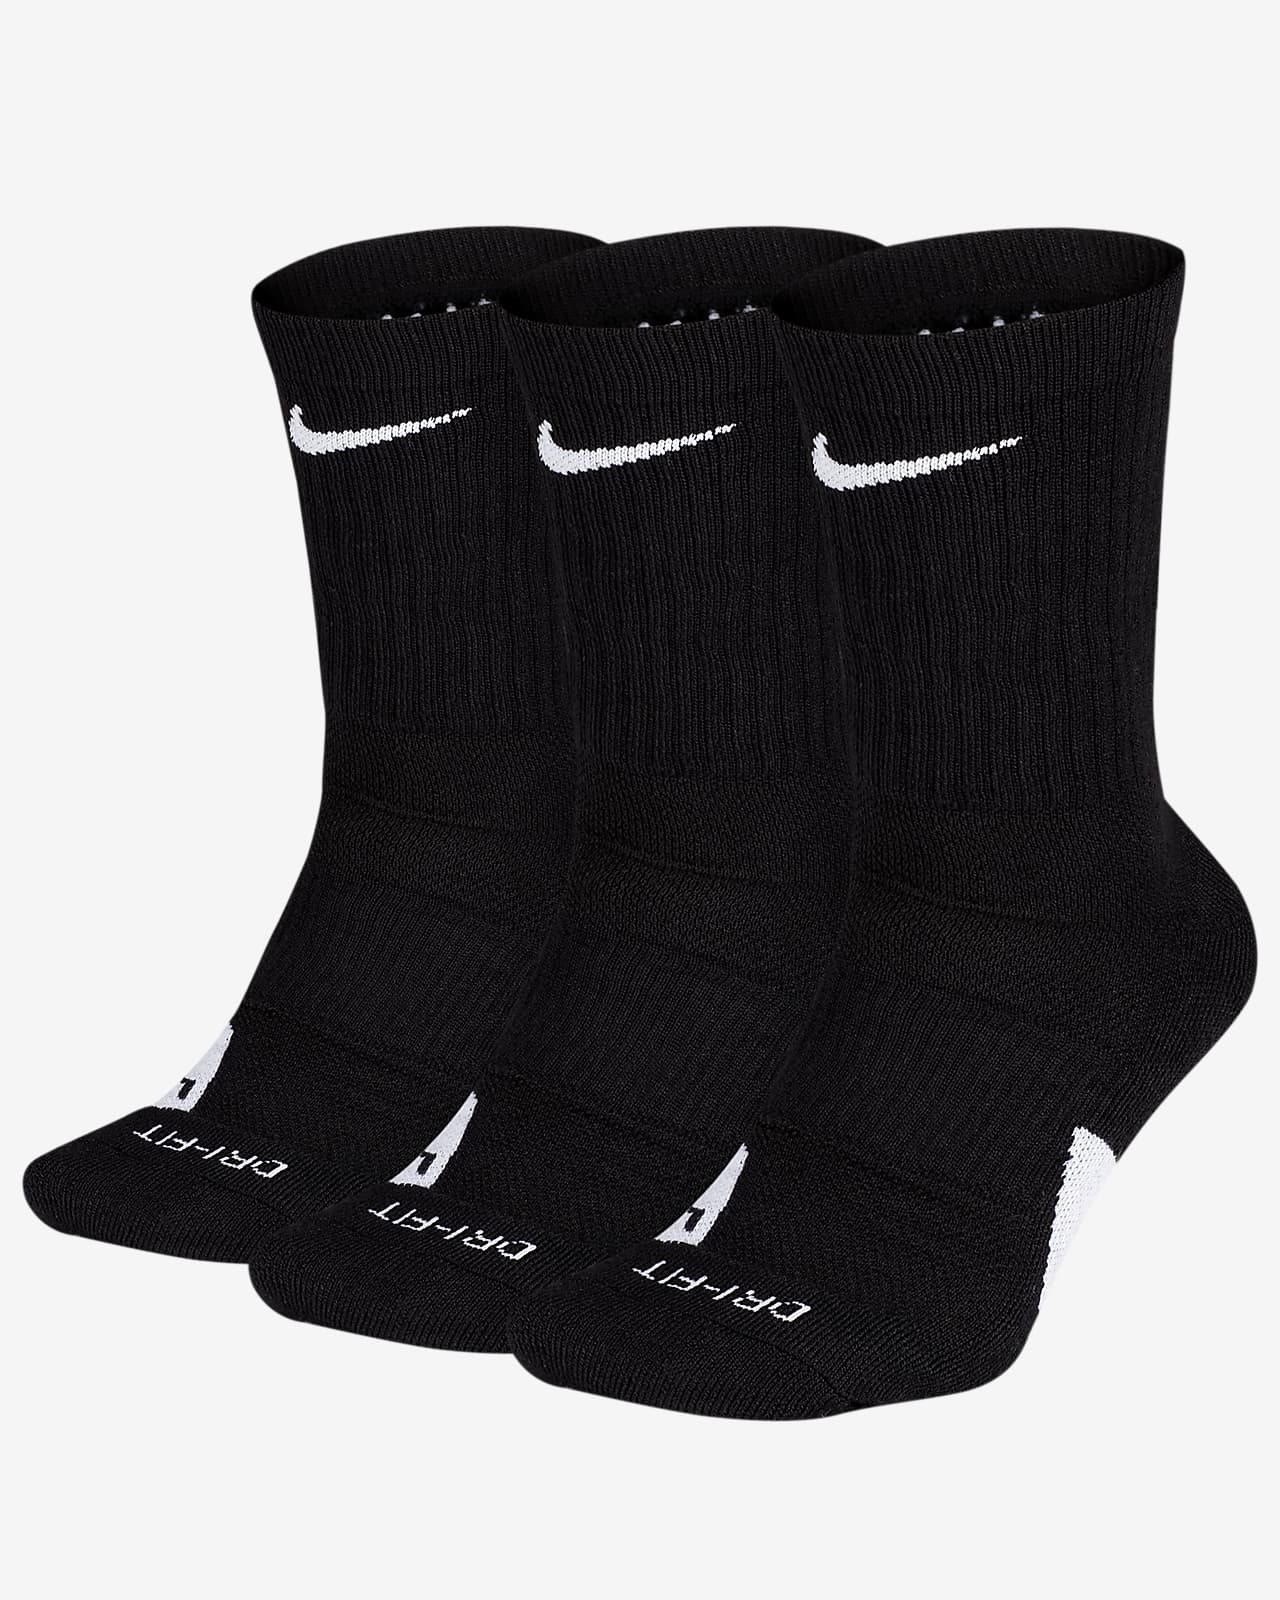 nike elite socks 1.5